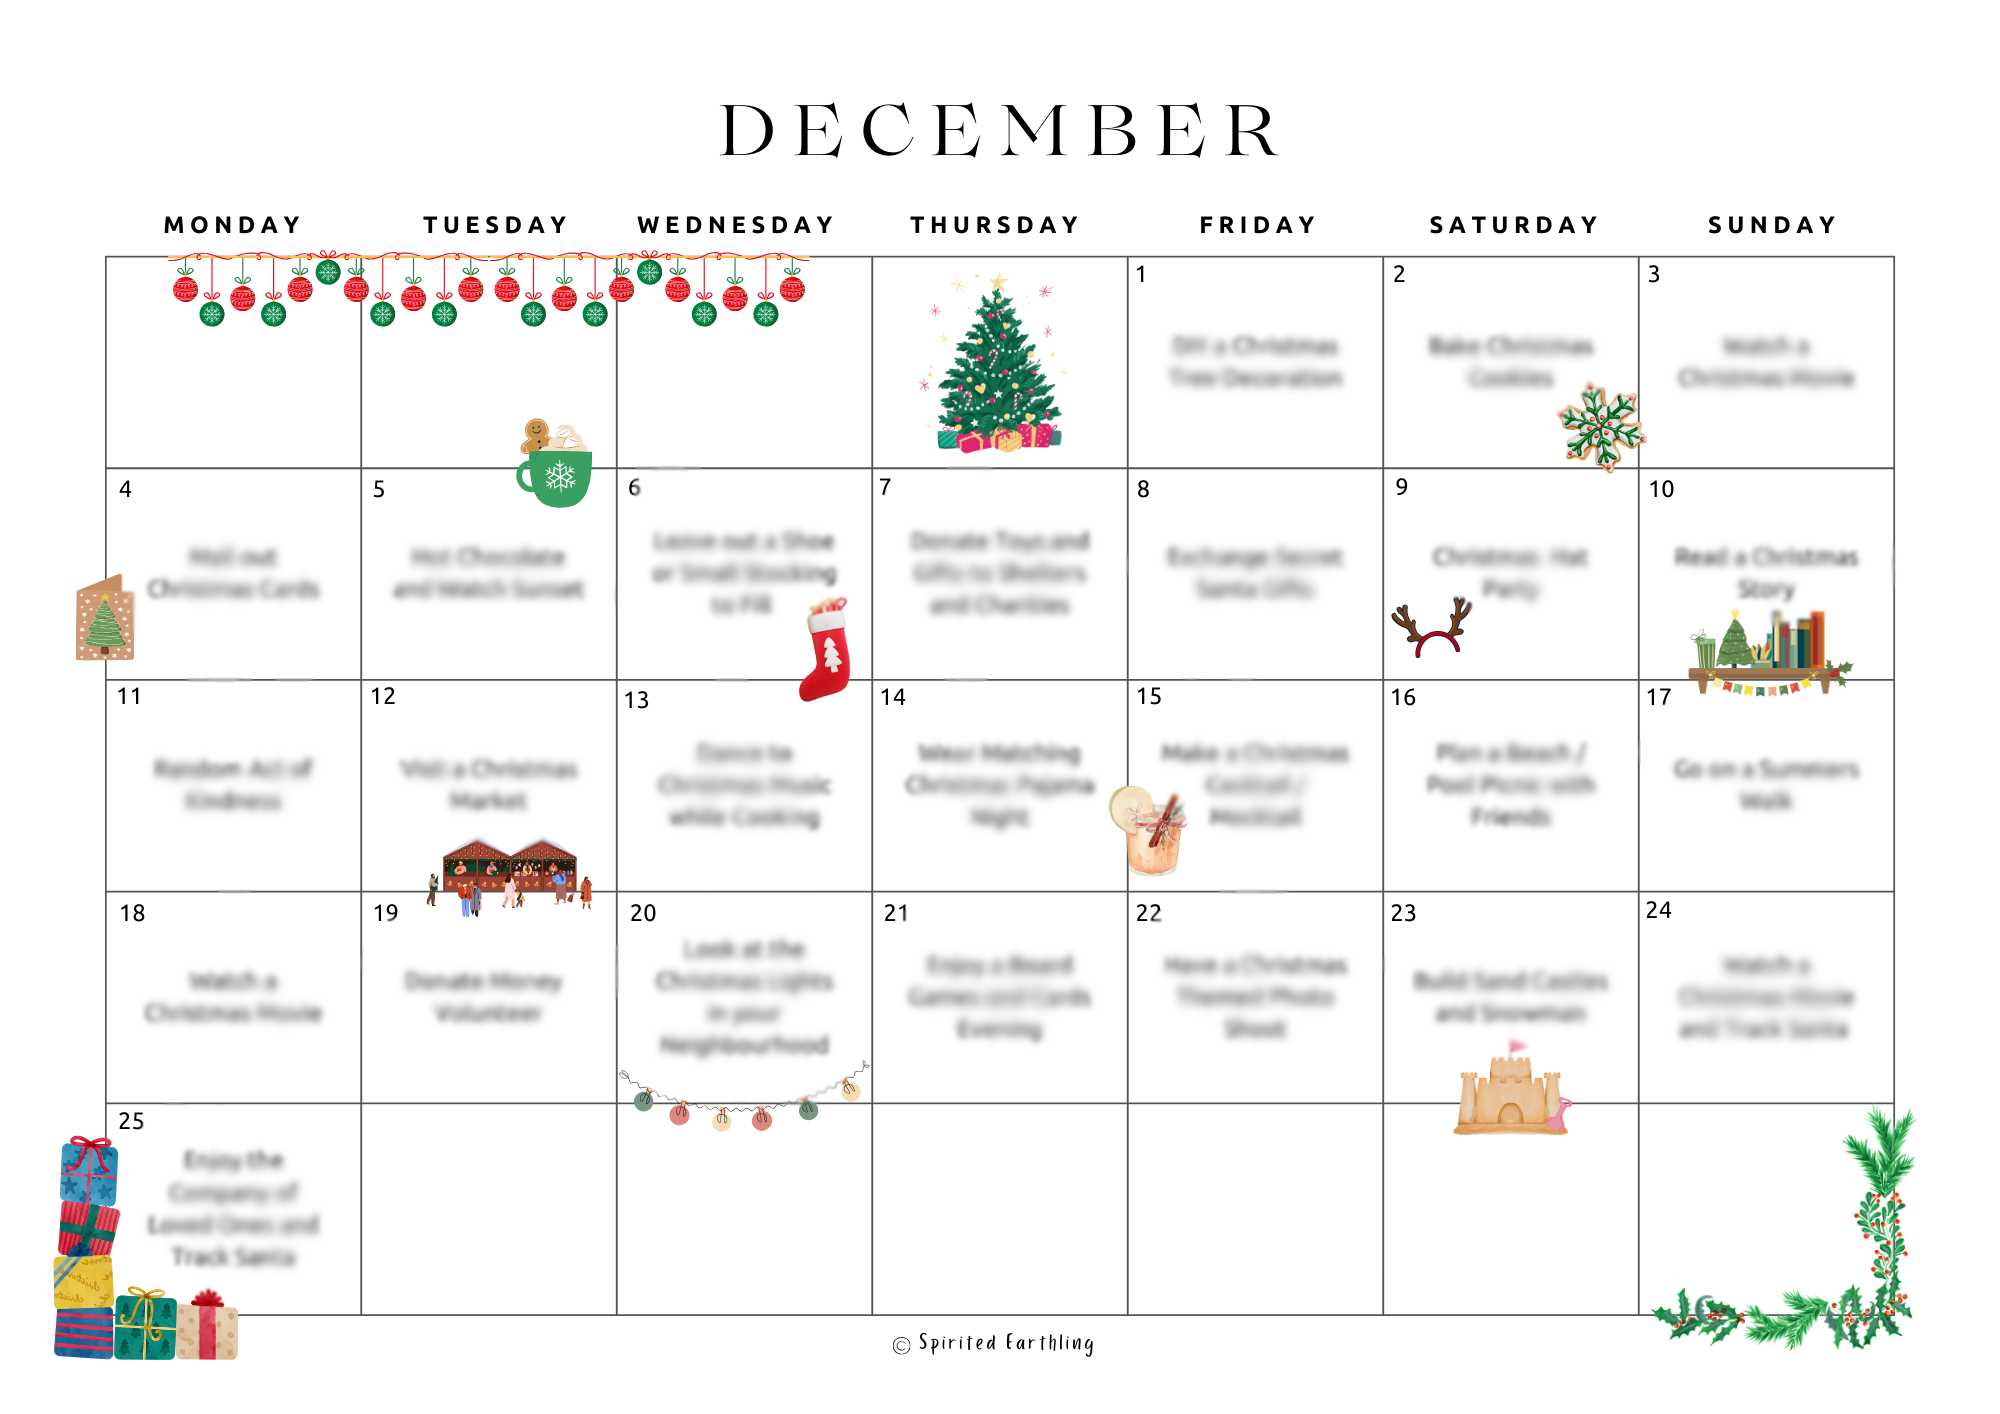 Christmas Advent Calendars 2023